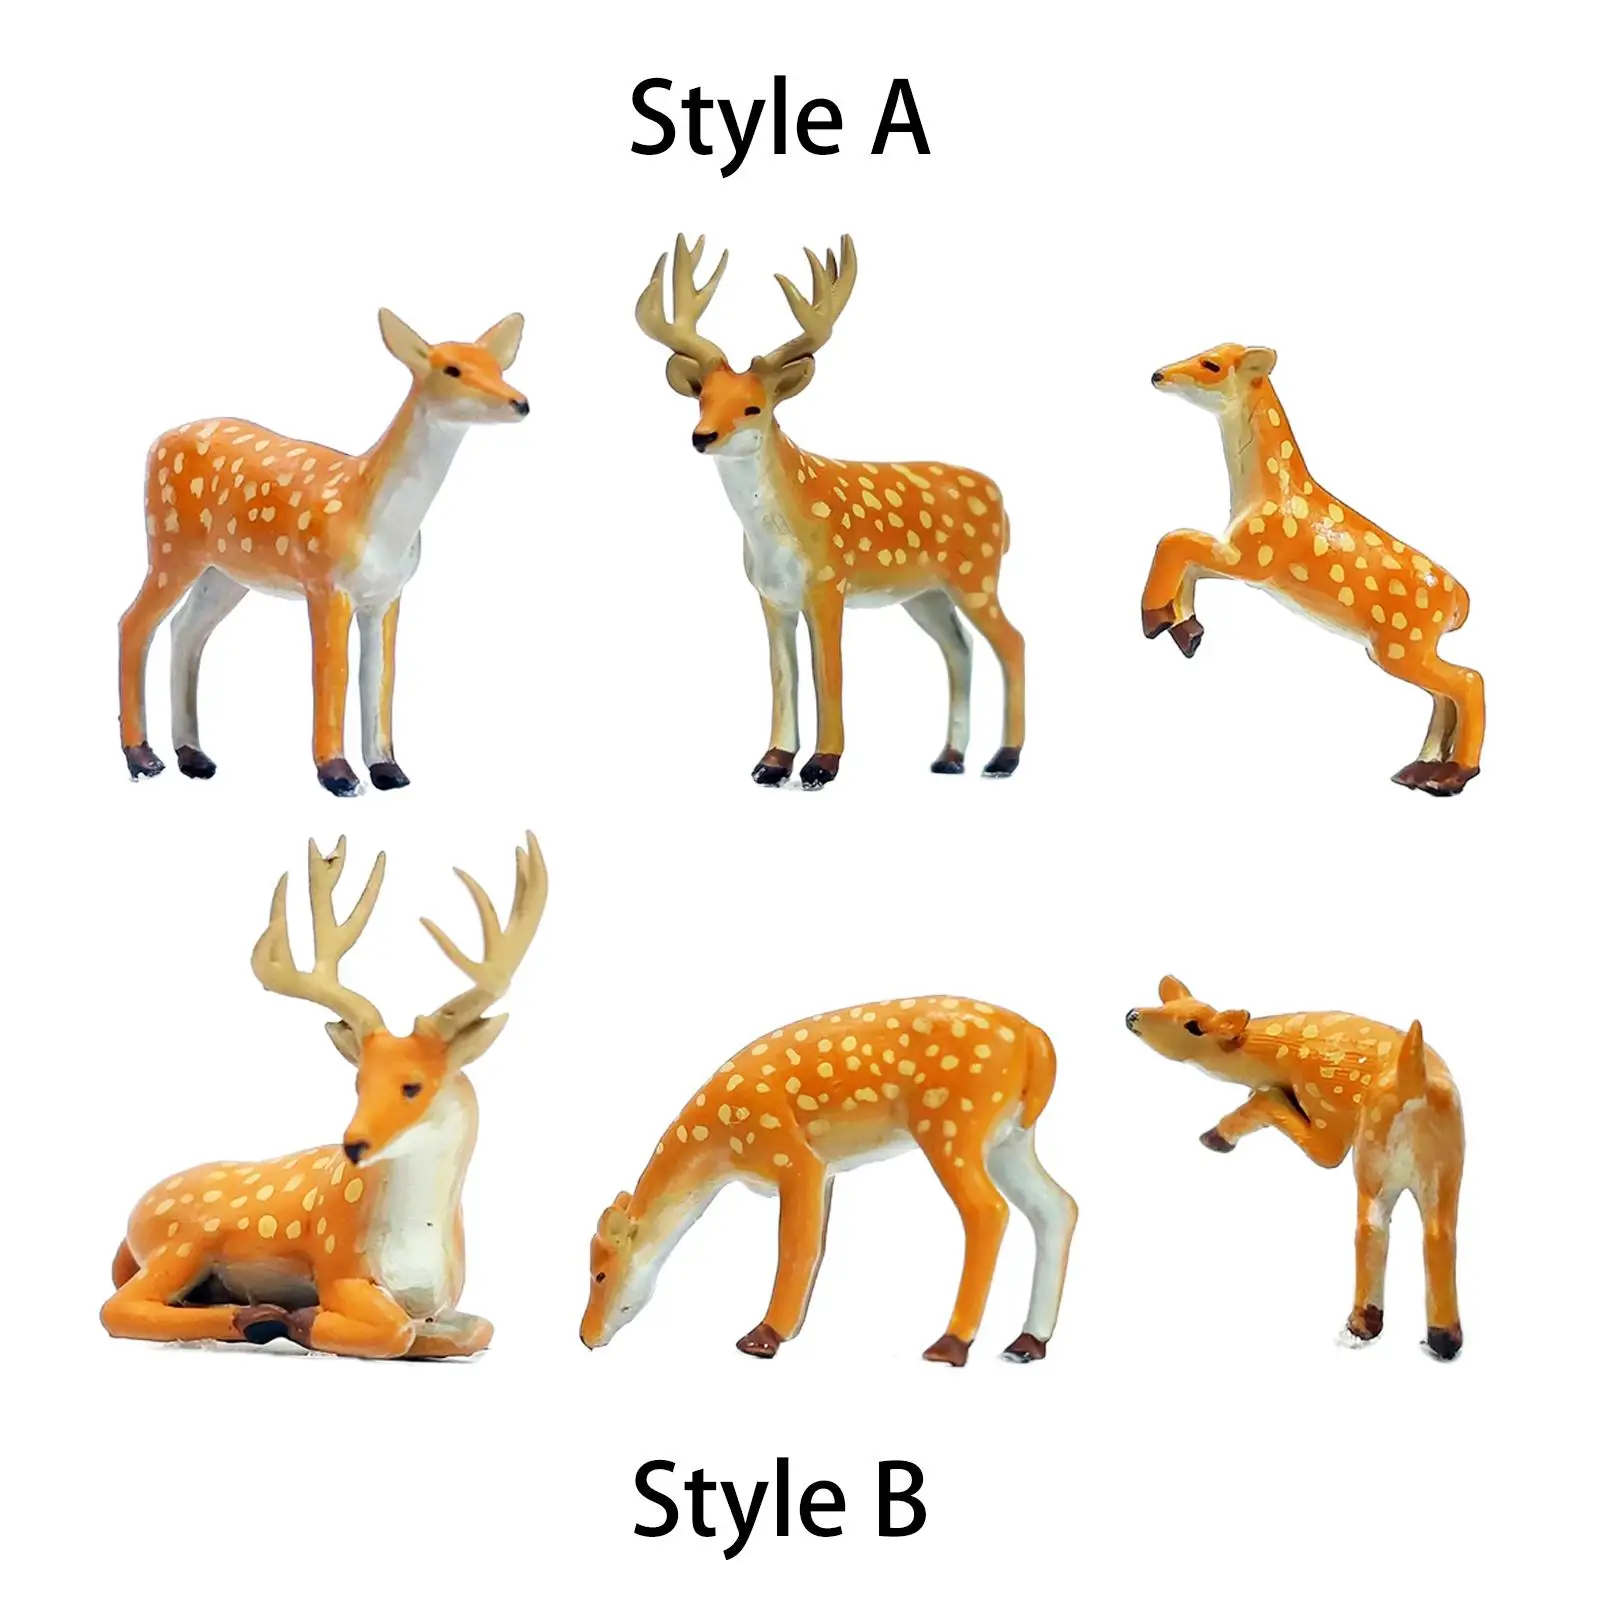 

3x 1/64 Deer Figures Woodland Animal Deer Model Resin Statue Forest Animals Figures for Crafts DIY Scene Ornament Projects Decor